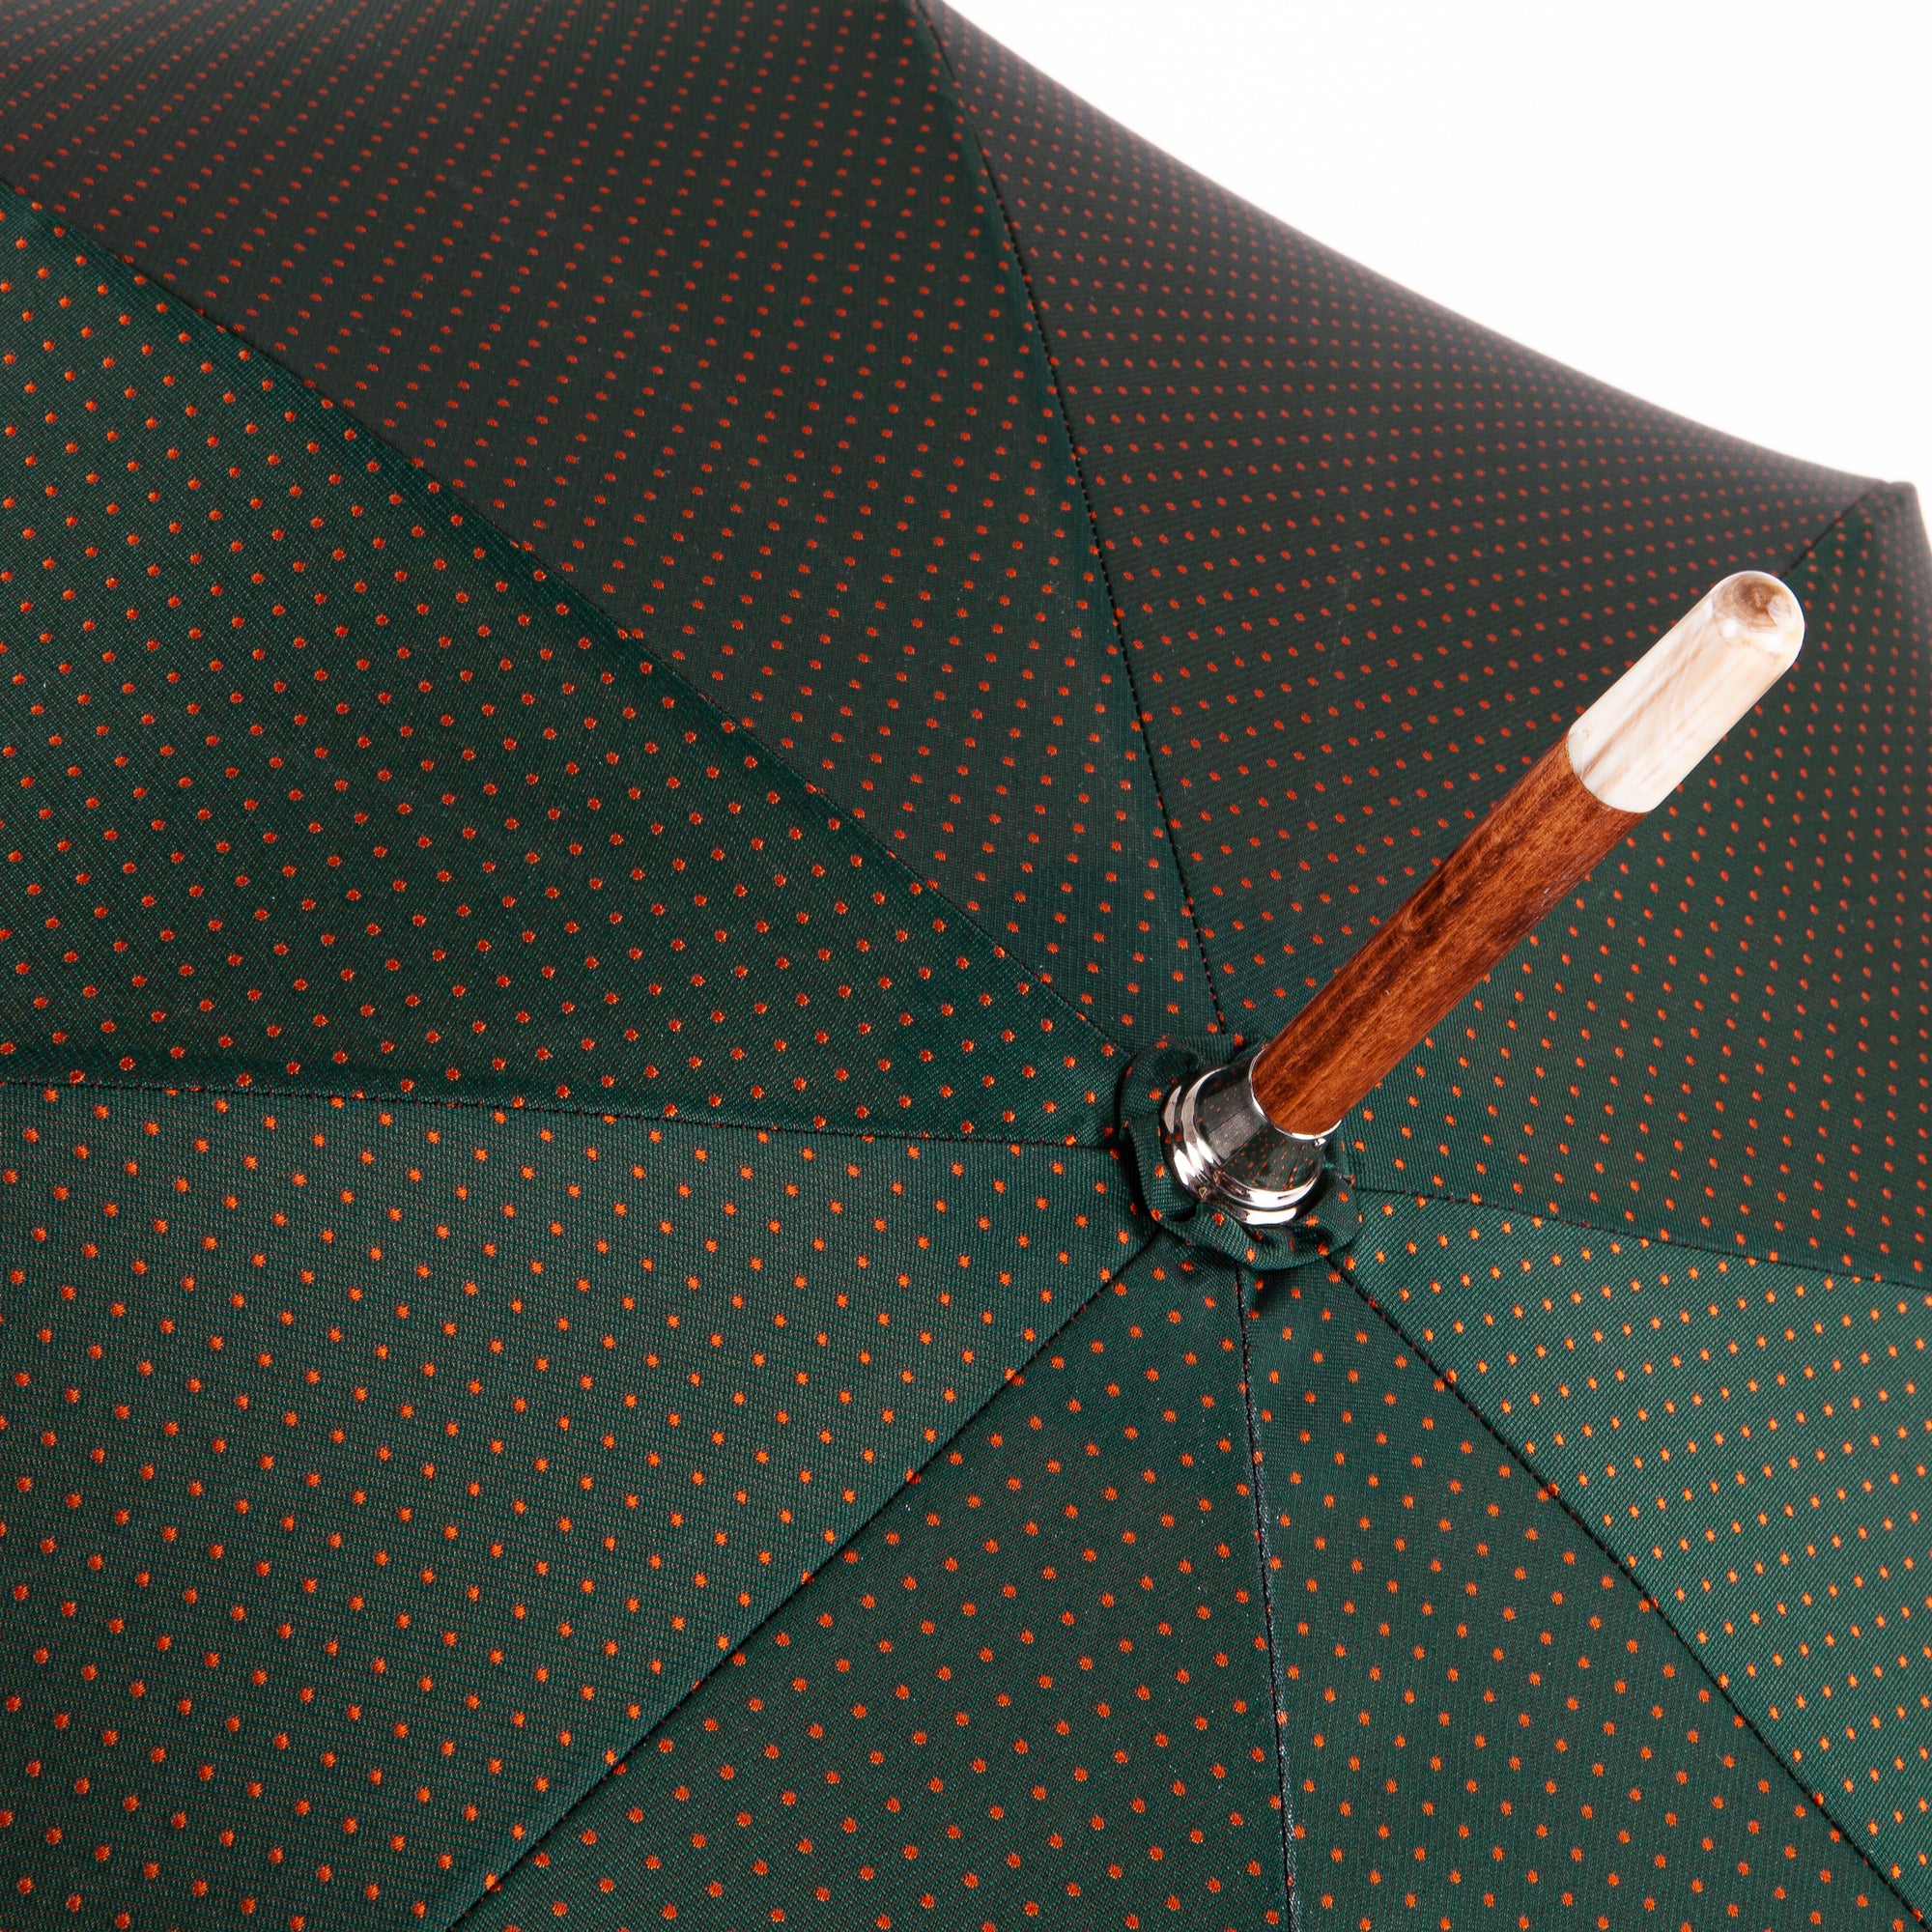 Japanese Bamboo Umbrella